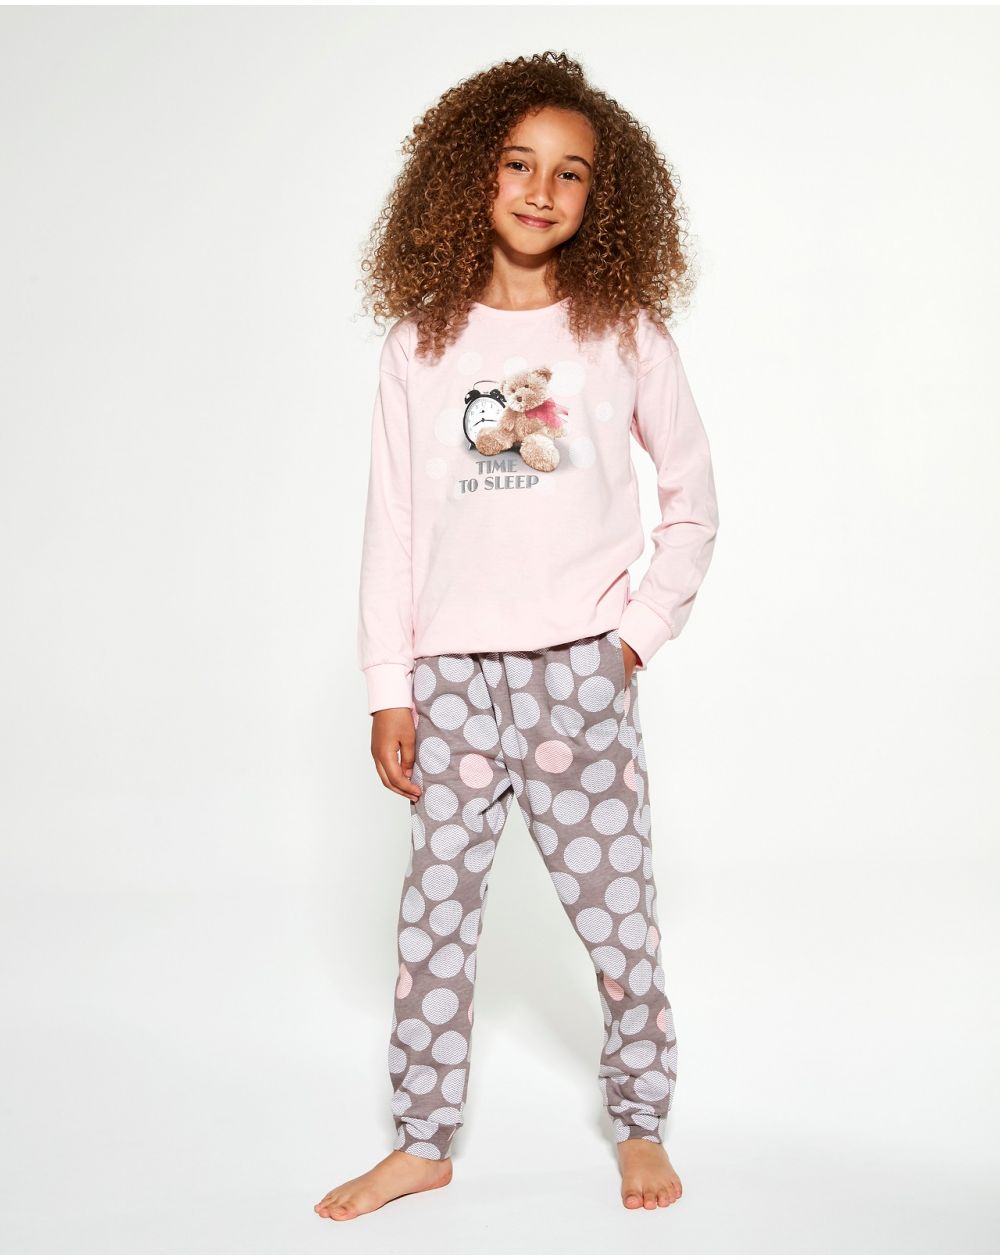 Pyjama Cornette Kids Girl 994/139 Time To Sleep 2